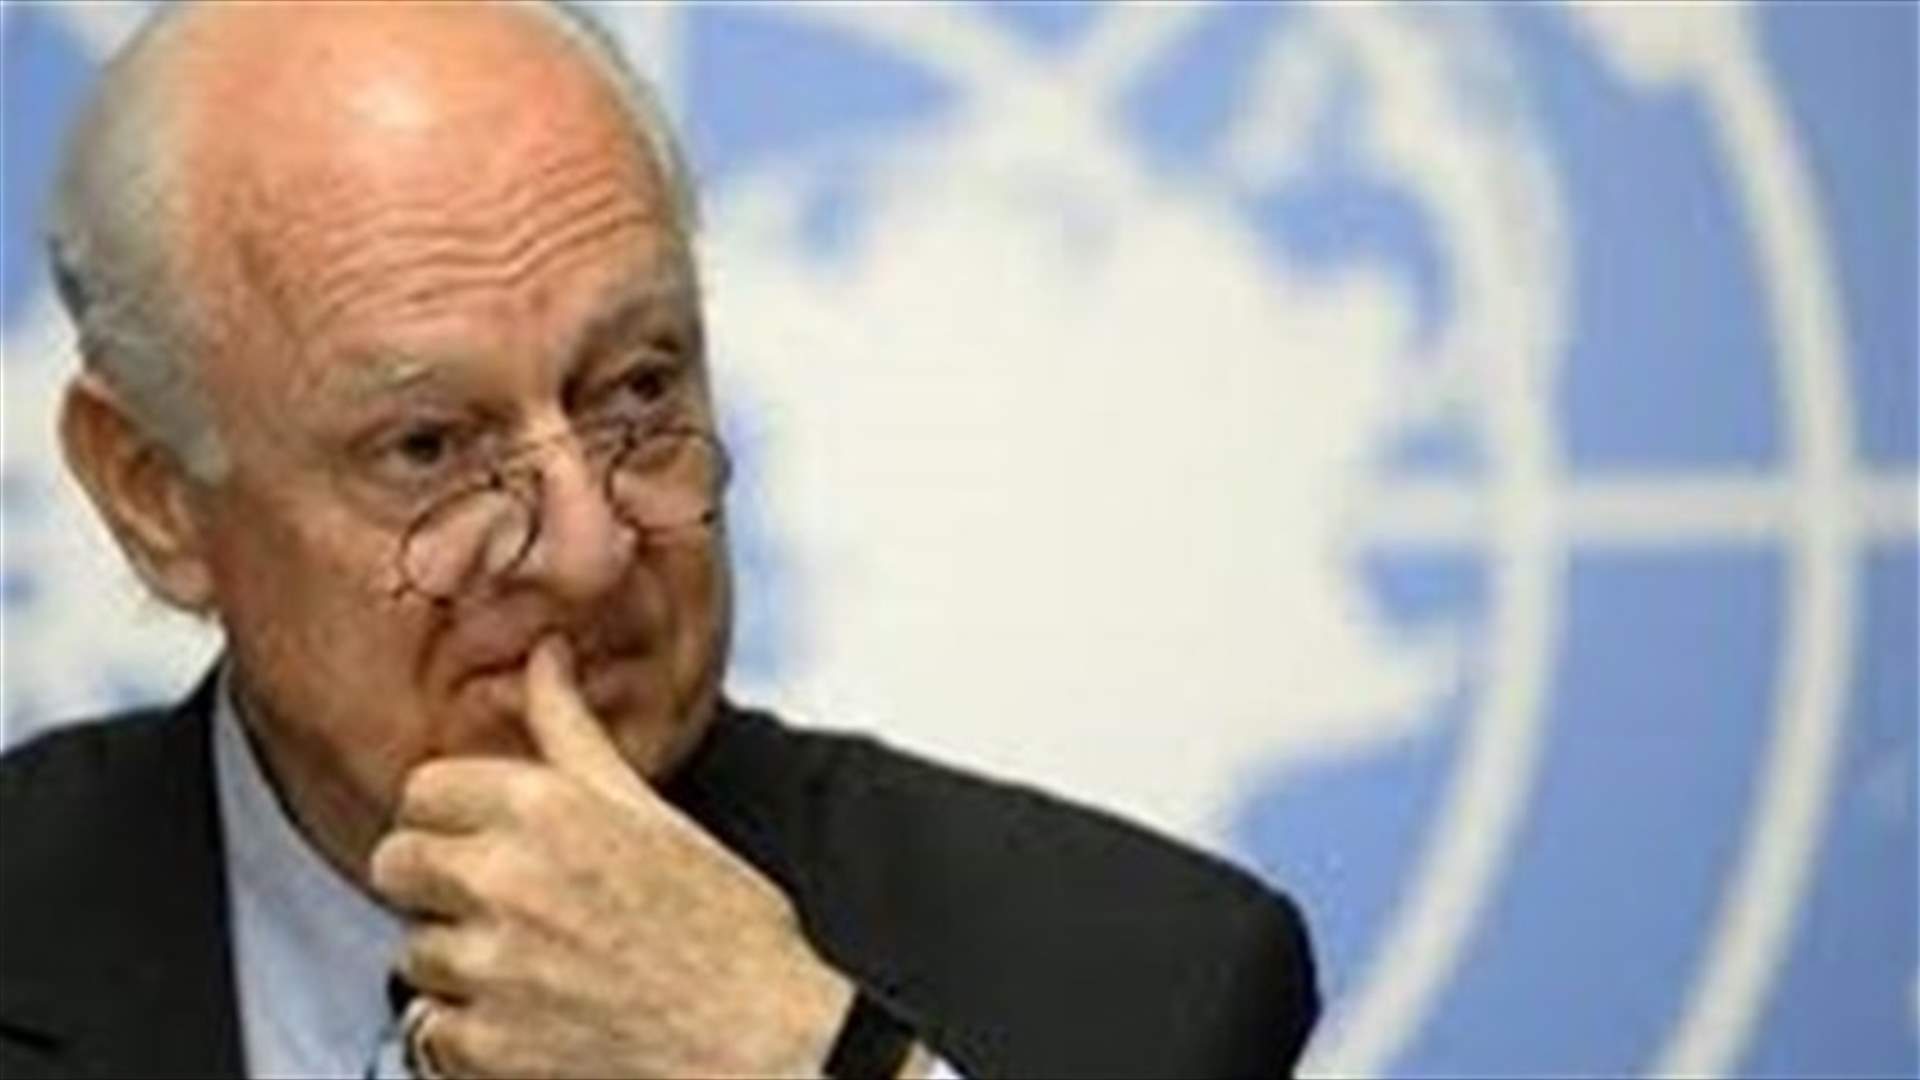 Russia, Turkey, Iran must hold talks to stop Syria violence - UN